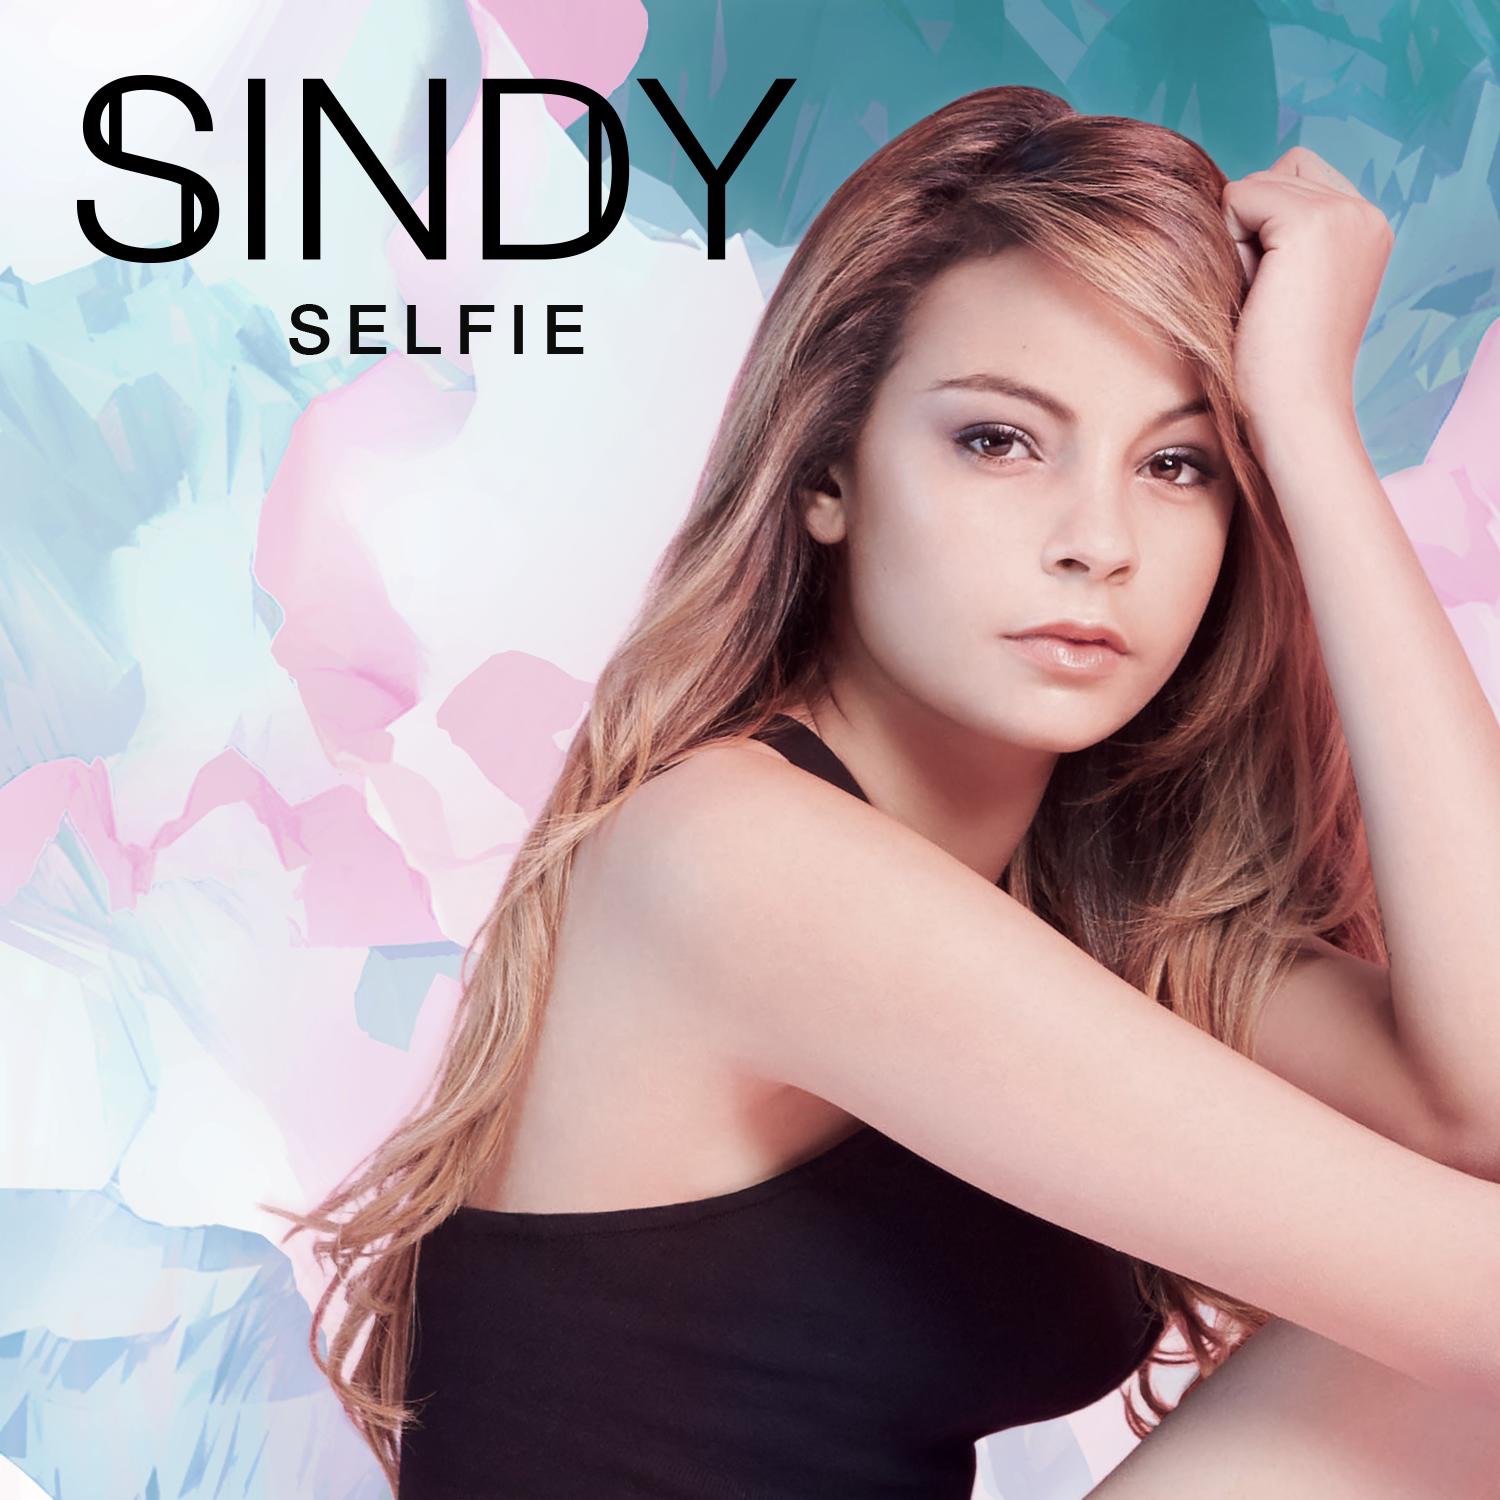 Sindy Selfie cover artwork